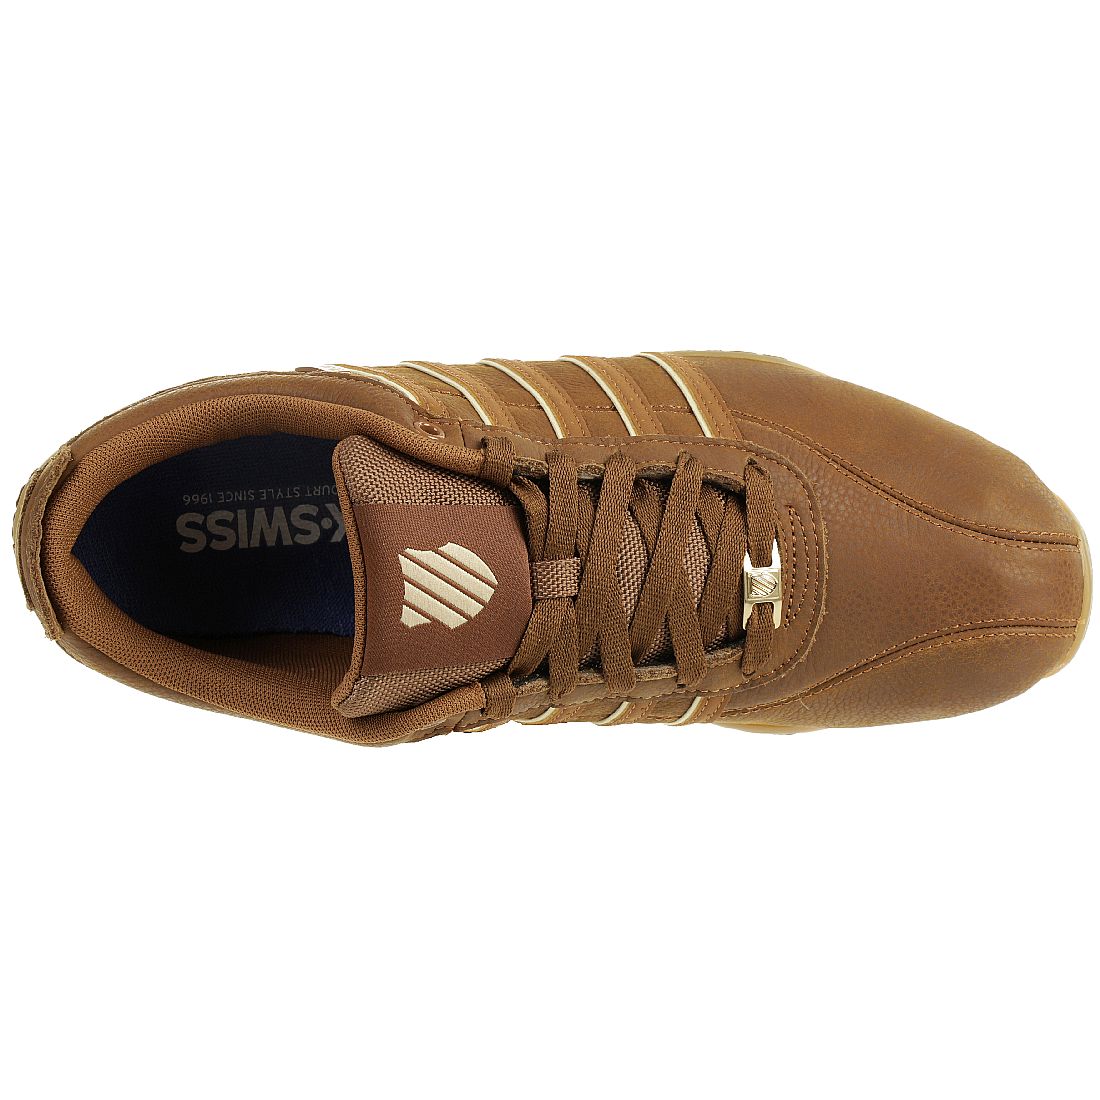 K-SWISS Arvee 1.5 Schuhe Sneaker braun Leder 02453-218-M